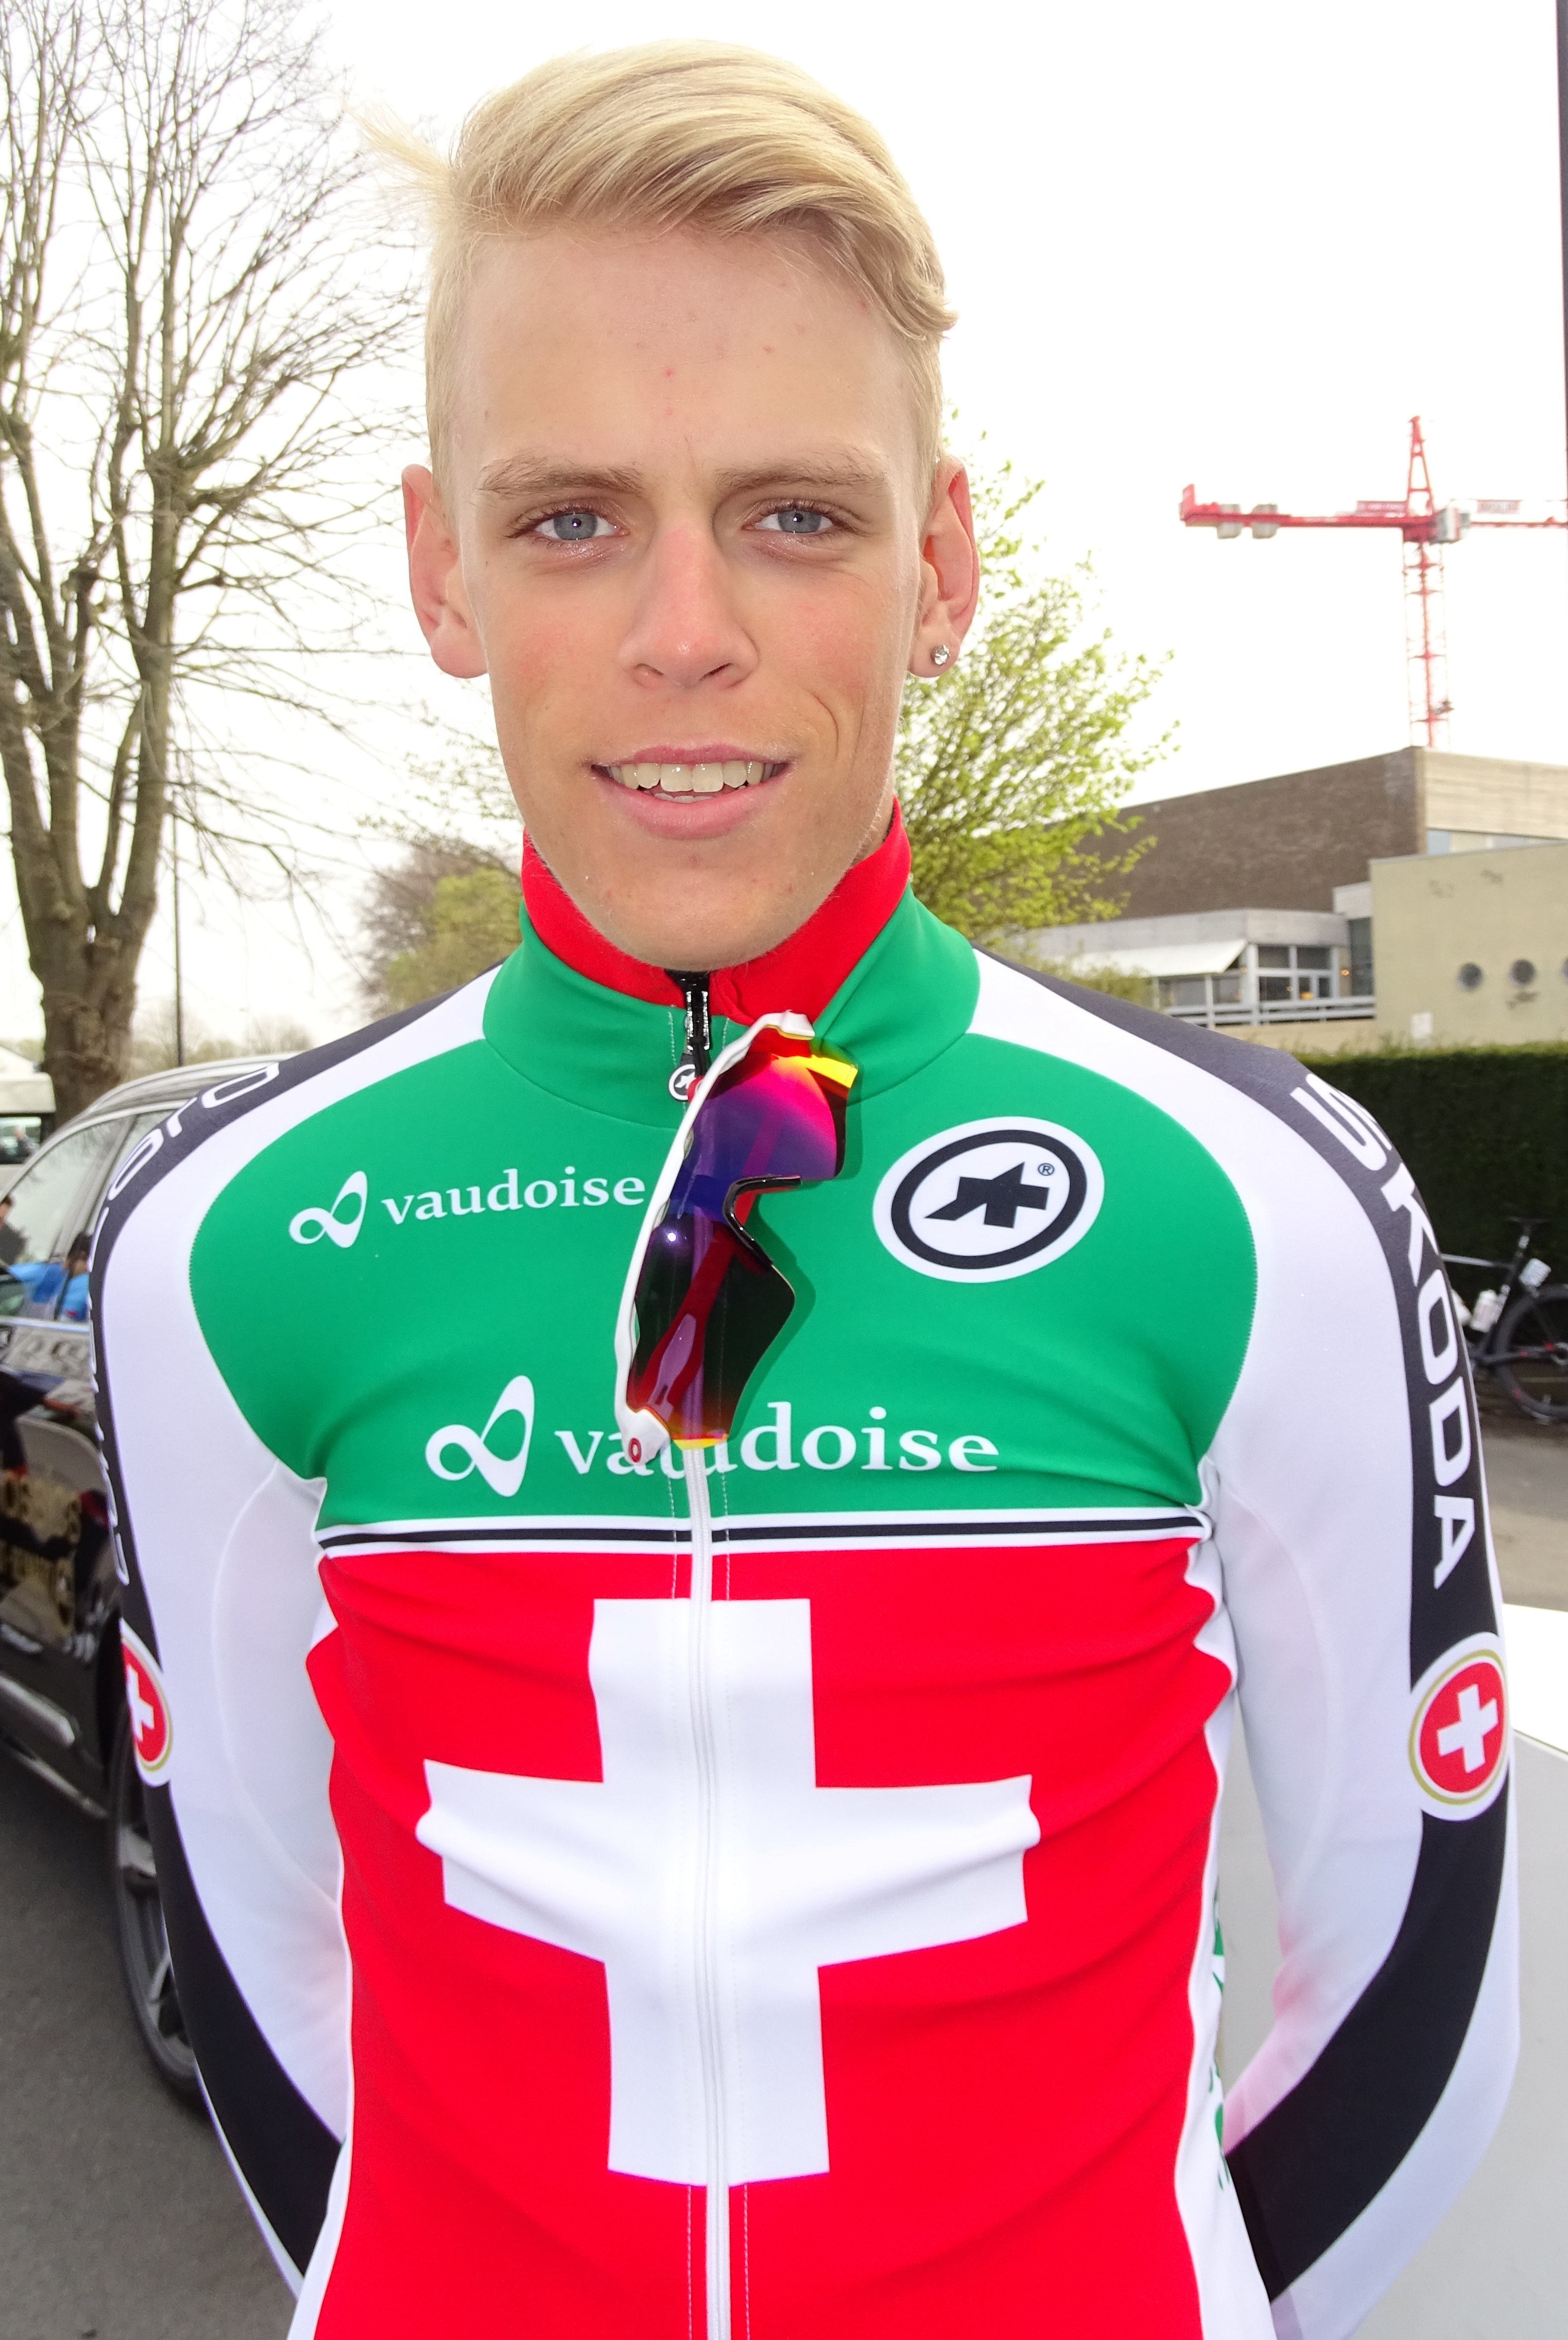 Patrick Müller (Radsportler) – Wikipedia